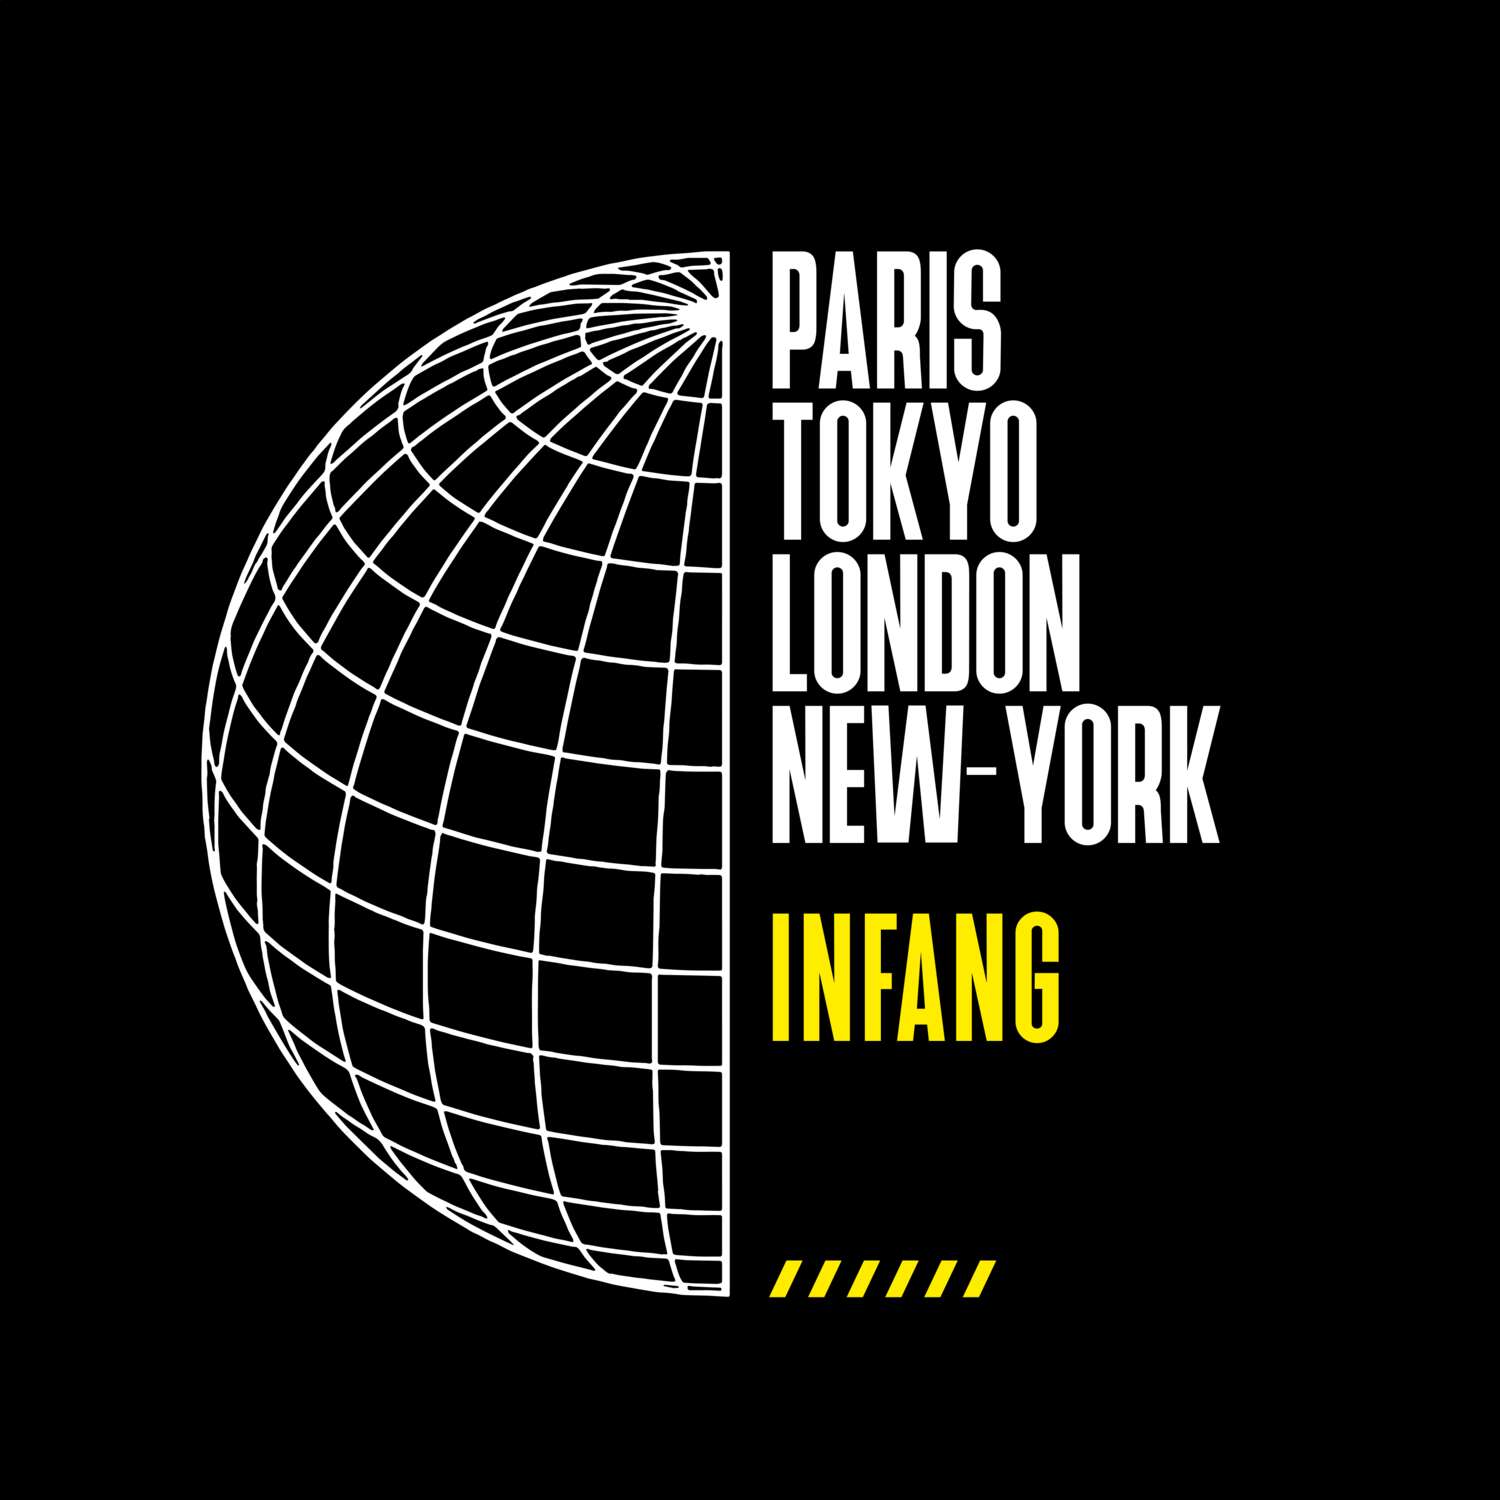 Infang T-Shirt »Paris Tokyo London«